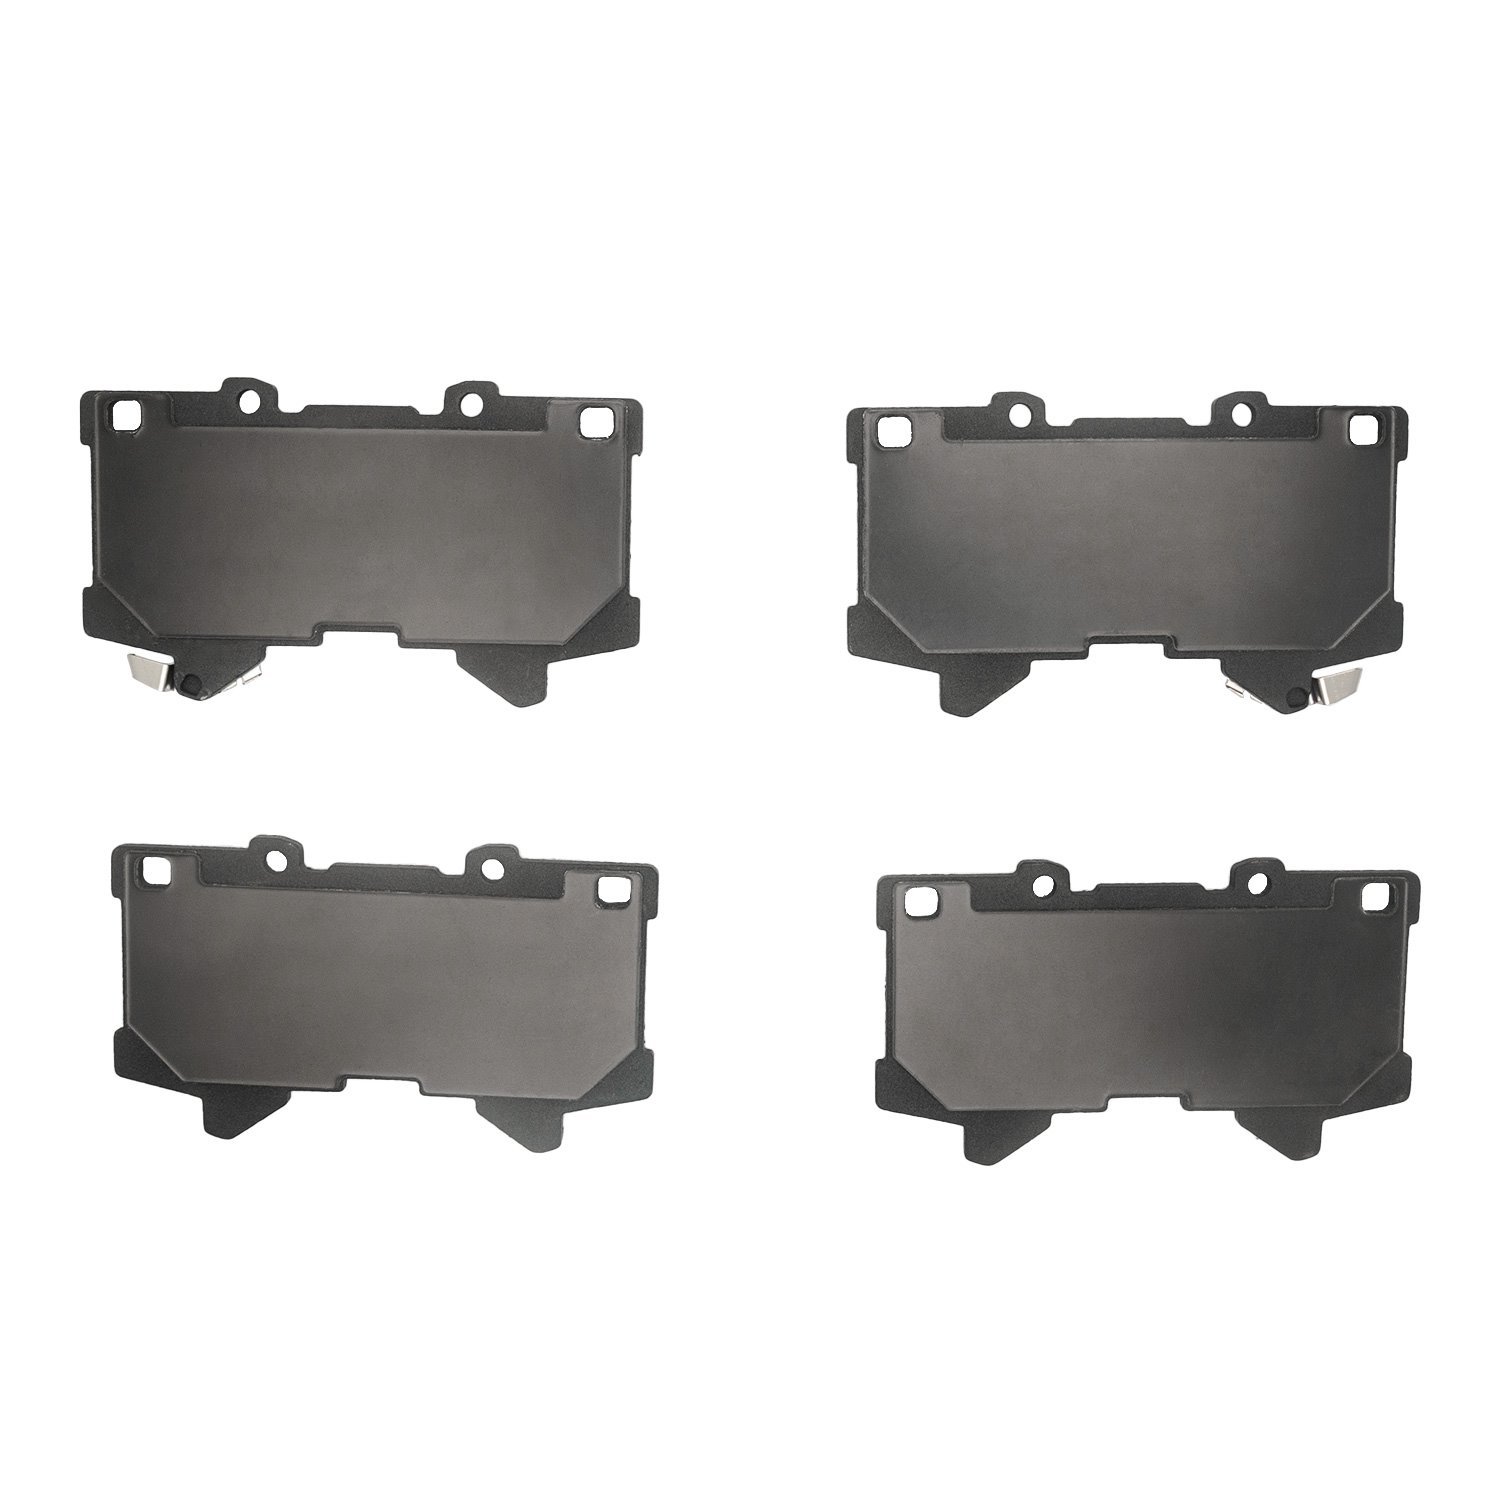 1551-2442-00 5000 Advanced Ceramic Brake Pads, Fits Select Lexus/Toyota/Scion, Position: Front